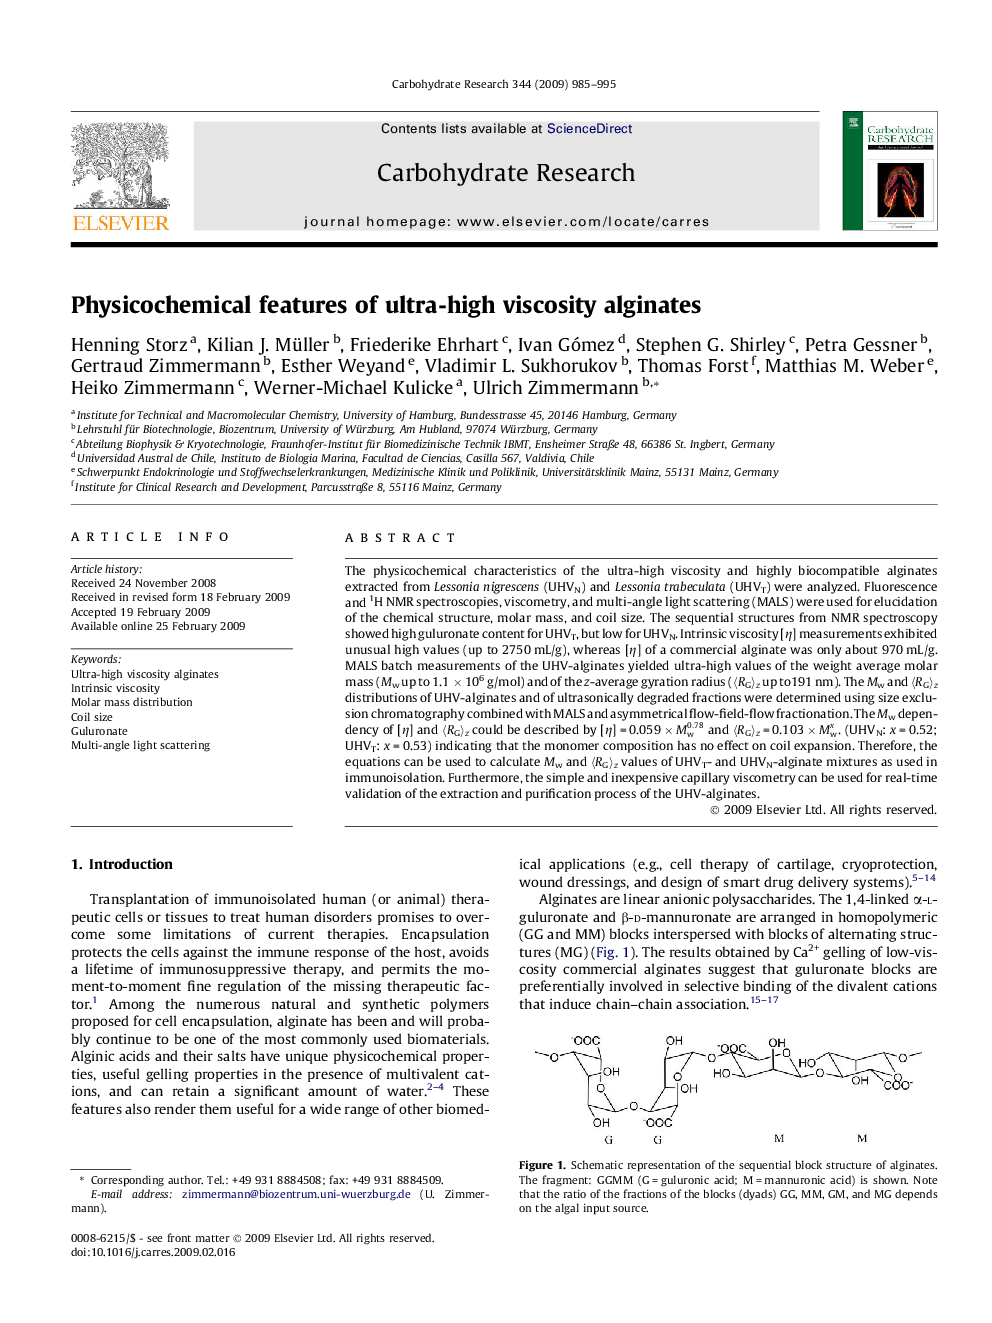 Physicochemical features of ultra-high viscosity alginates